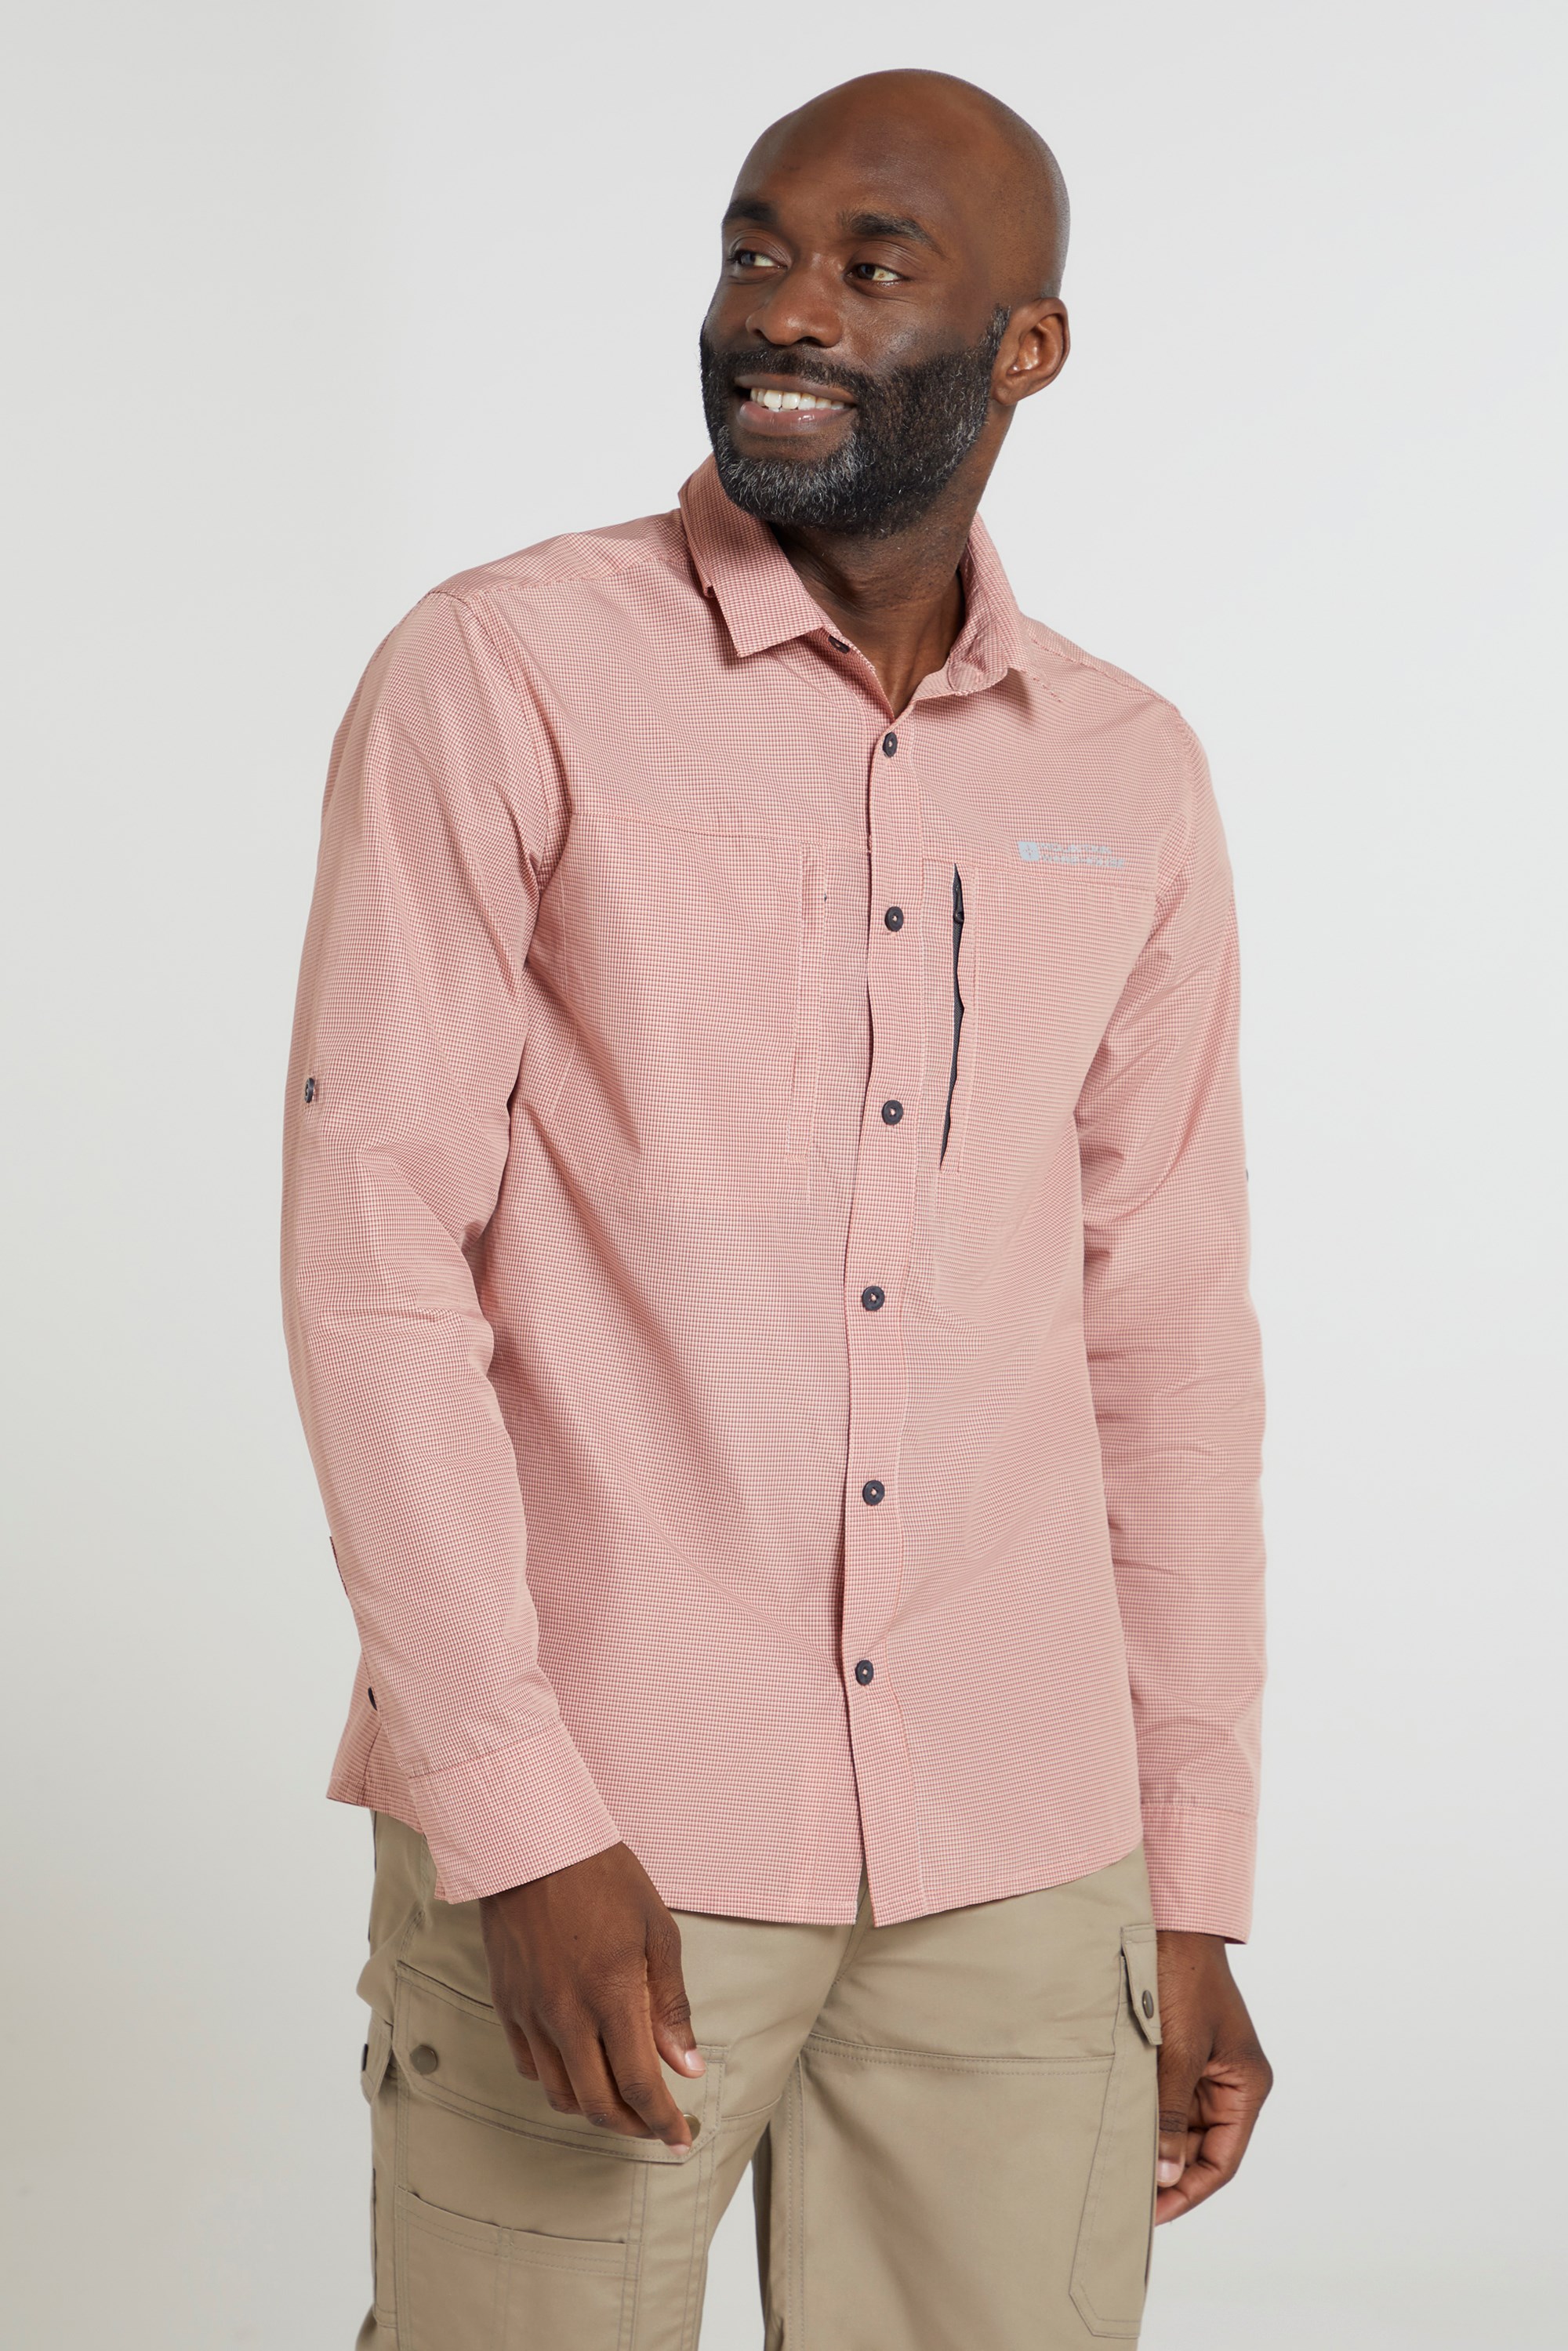 Mountain Warehouse Keel Mens Travel Shirt - Orange | Size XS